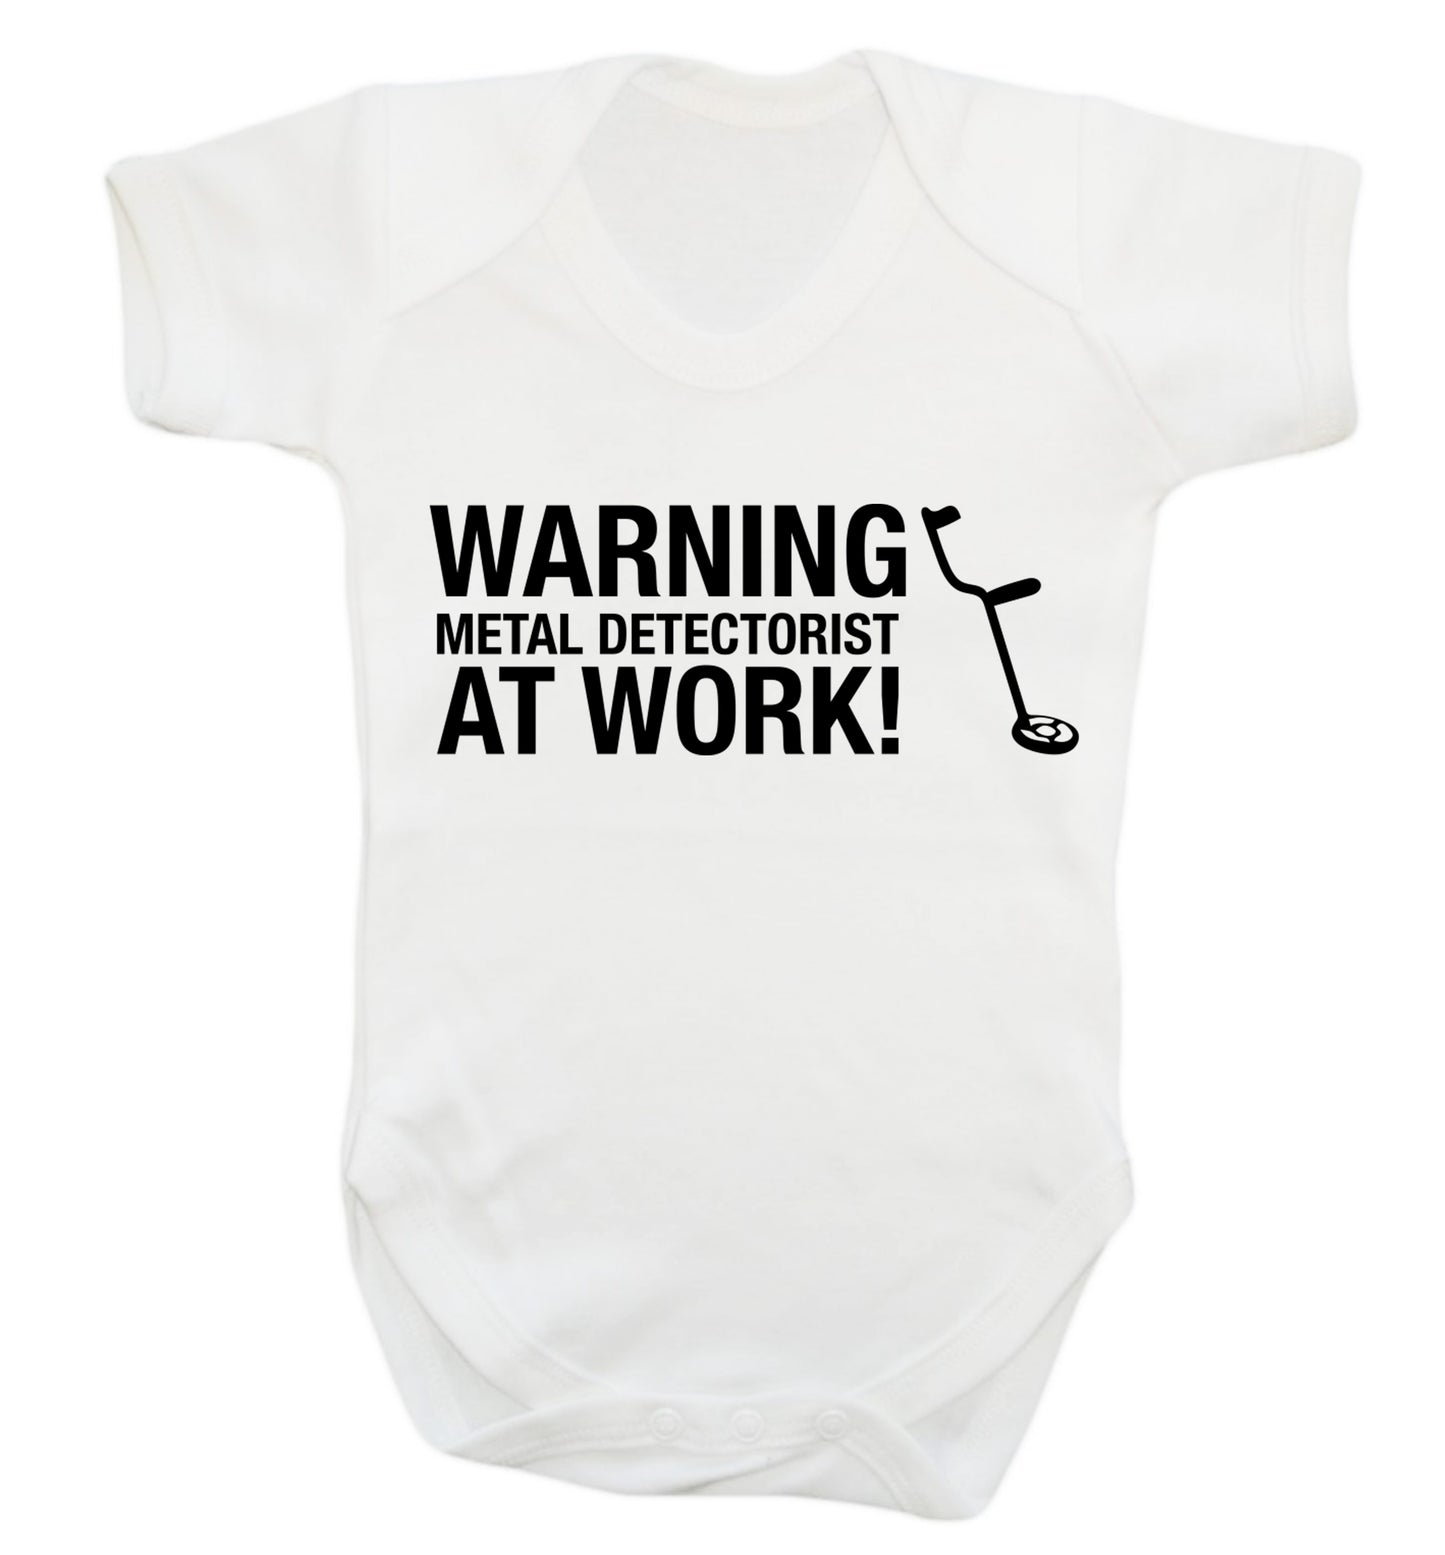 Warning metal detectorist at work! Baby Vest white 18-24 months